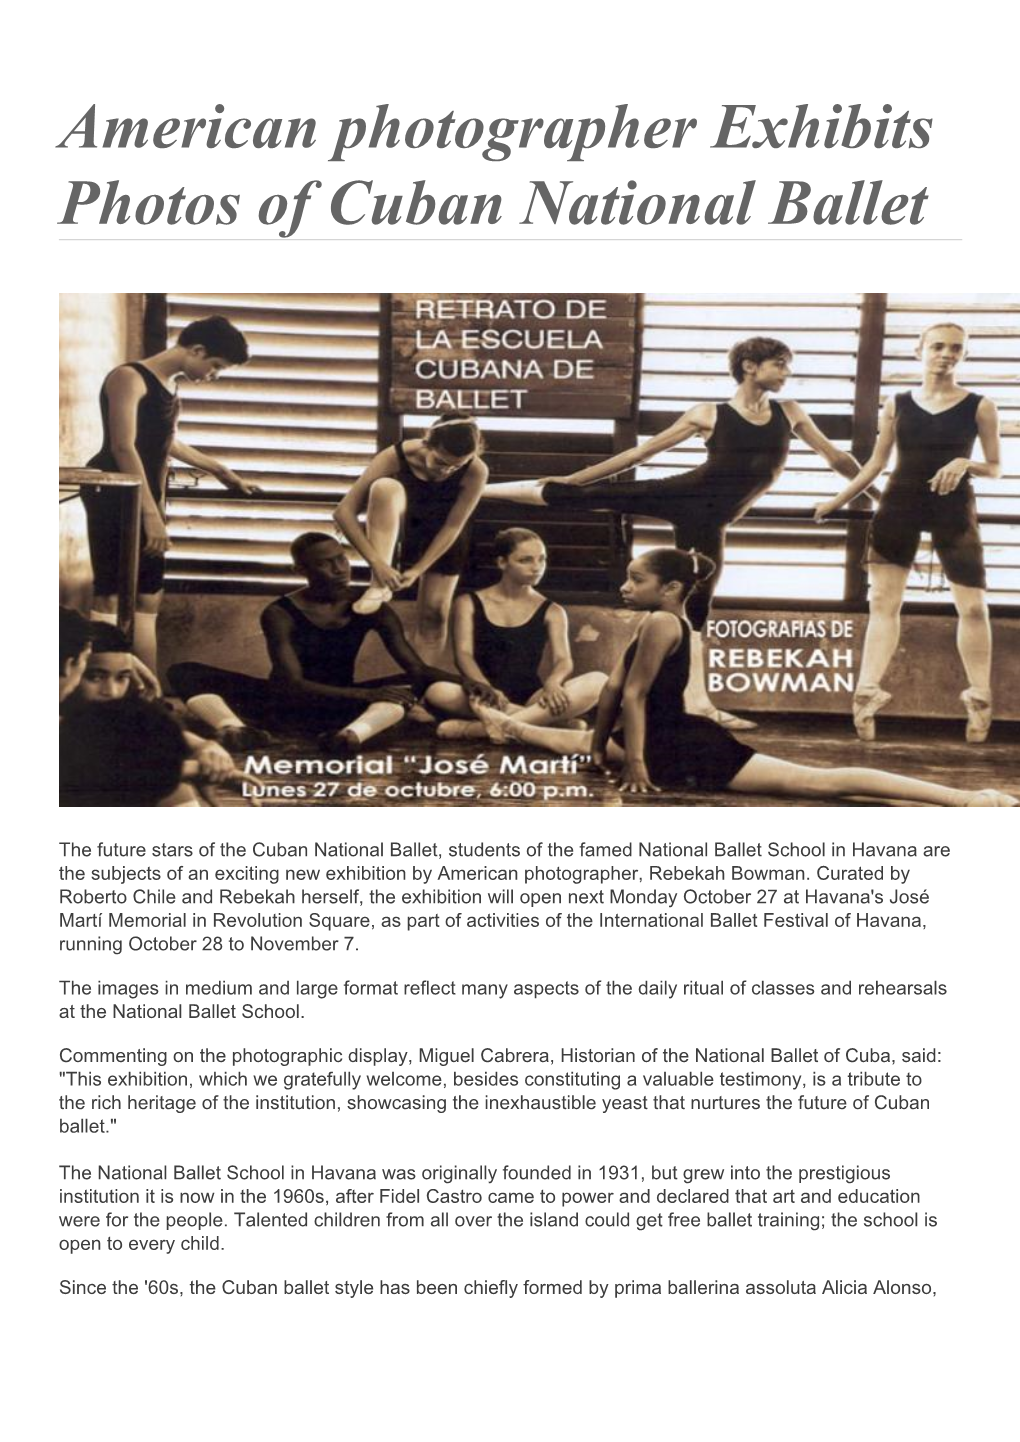 American Photographer Exhibits Photos of Cuban National Ballet